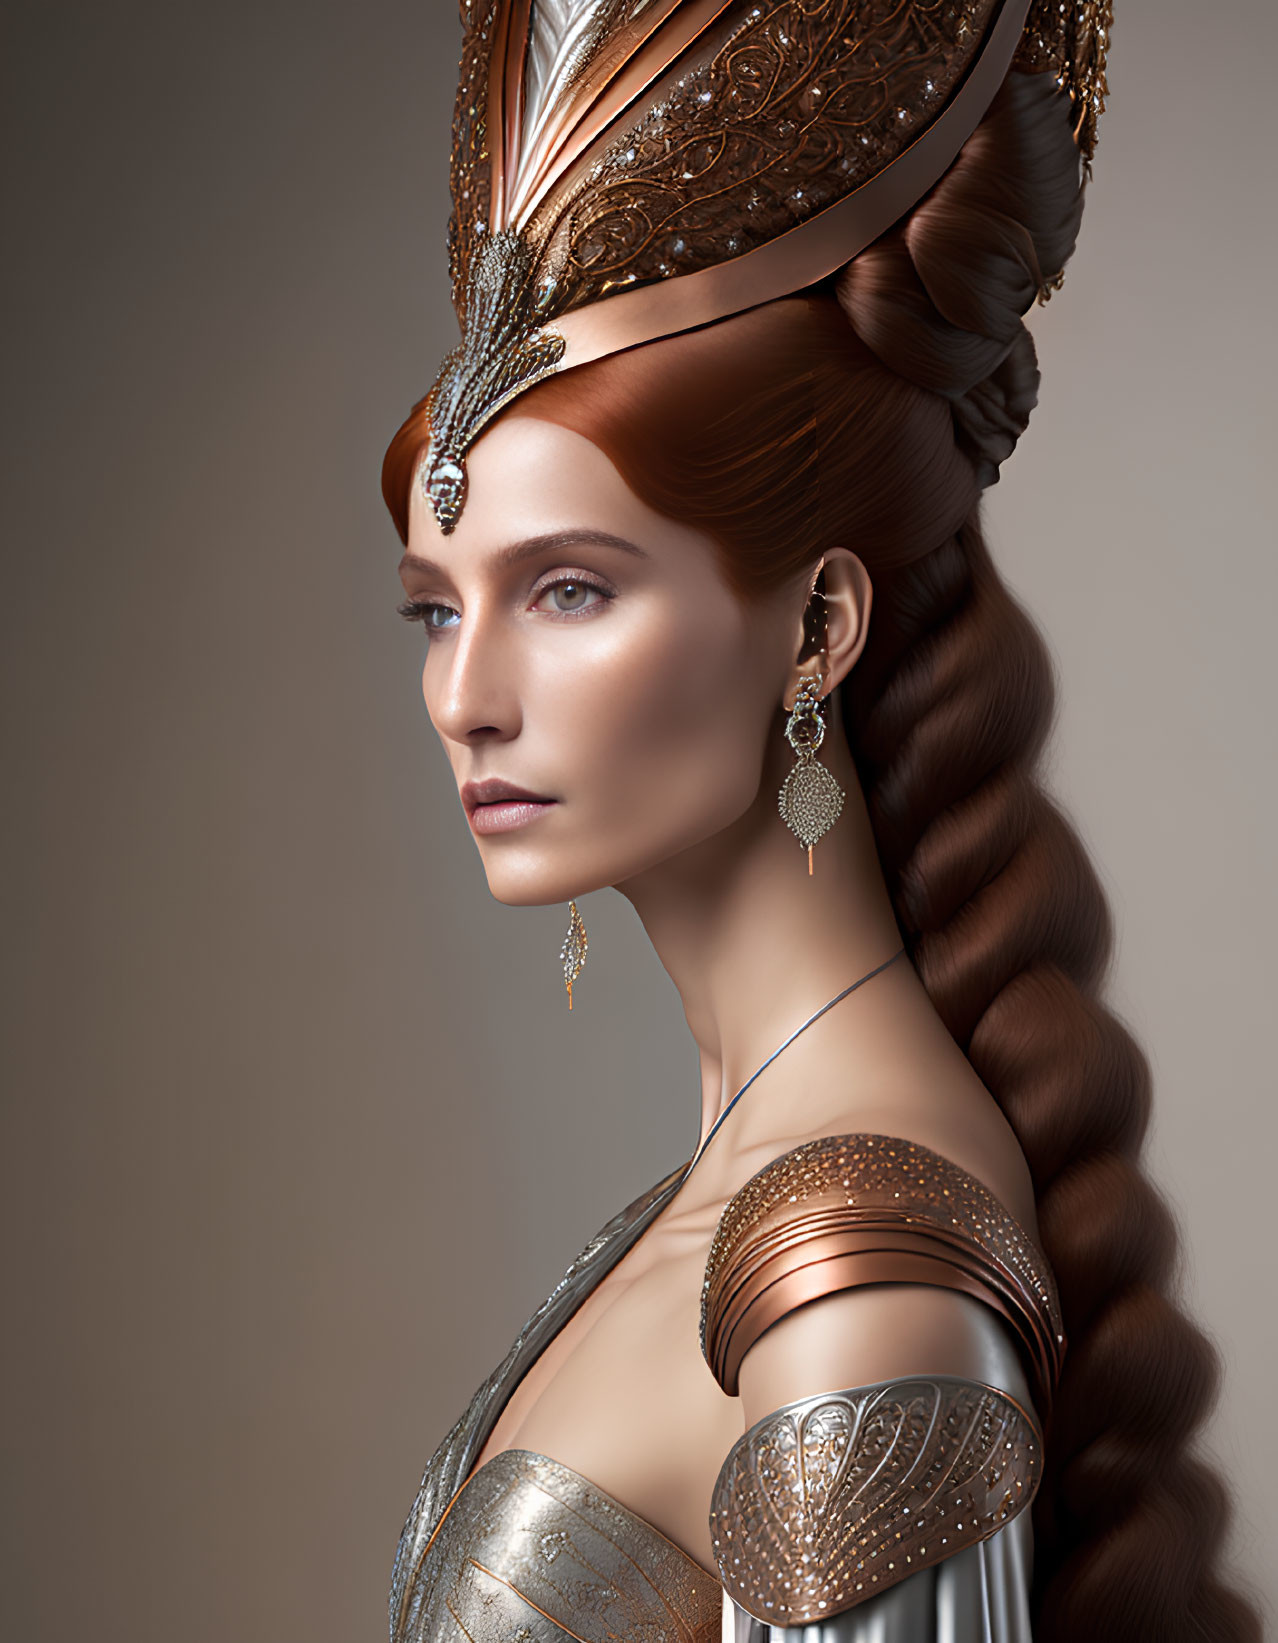 Elaborate headdress and metallic attire on poised woman